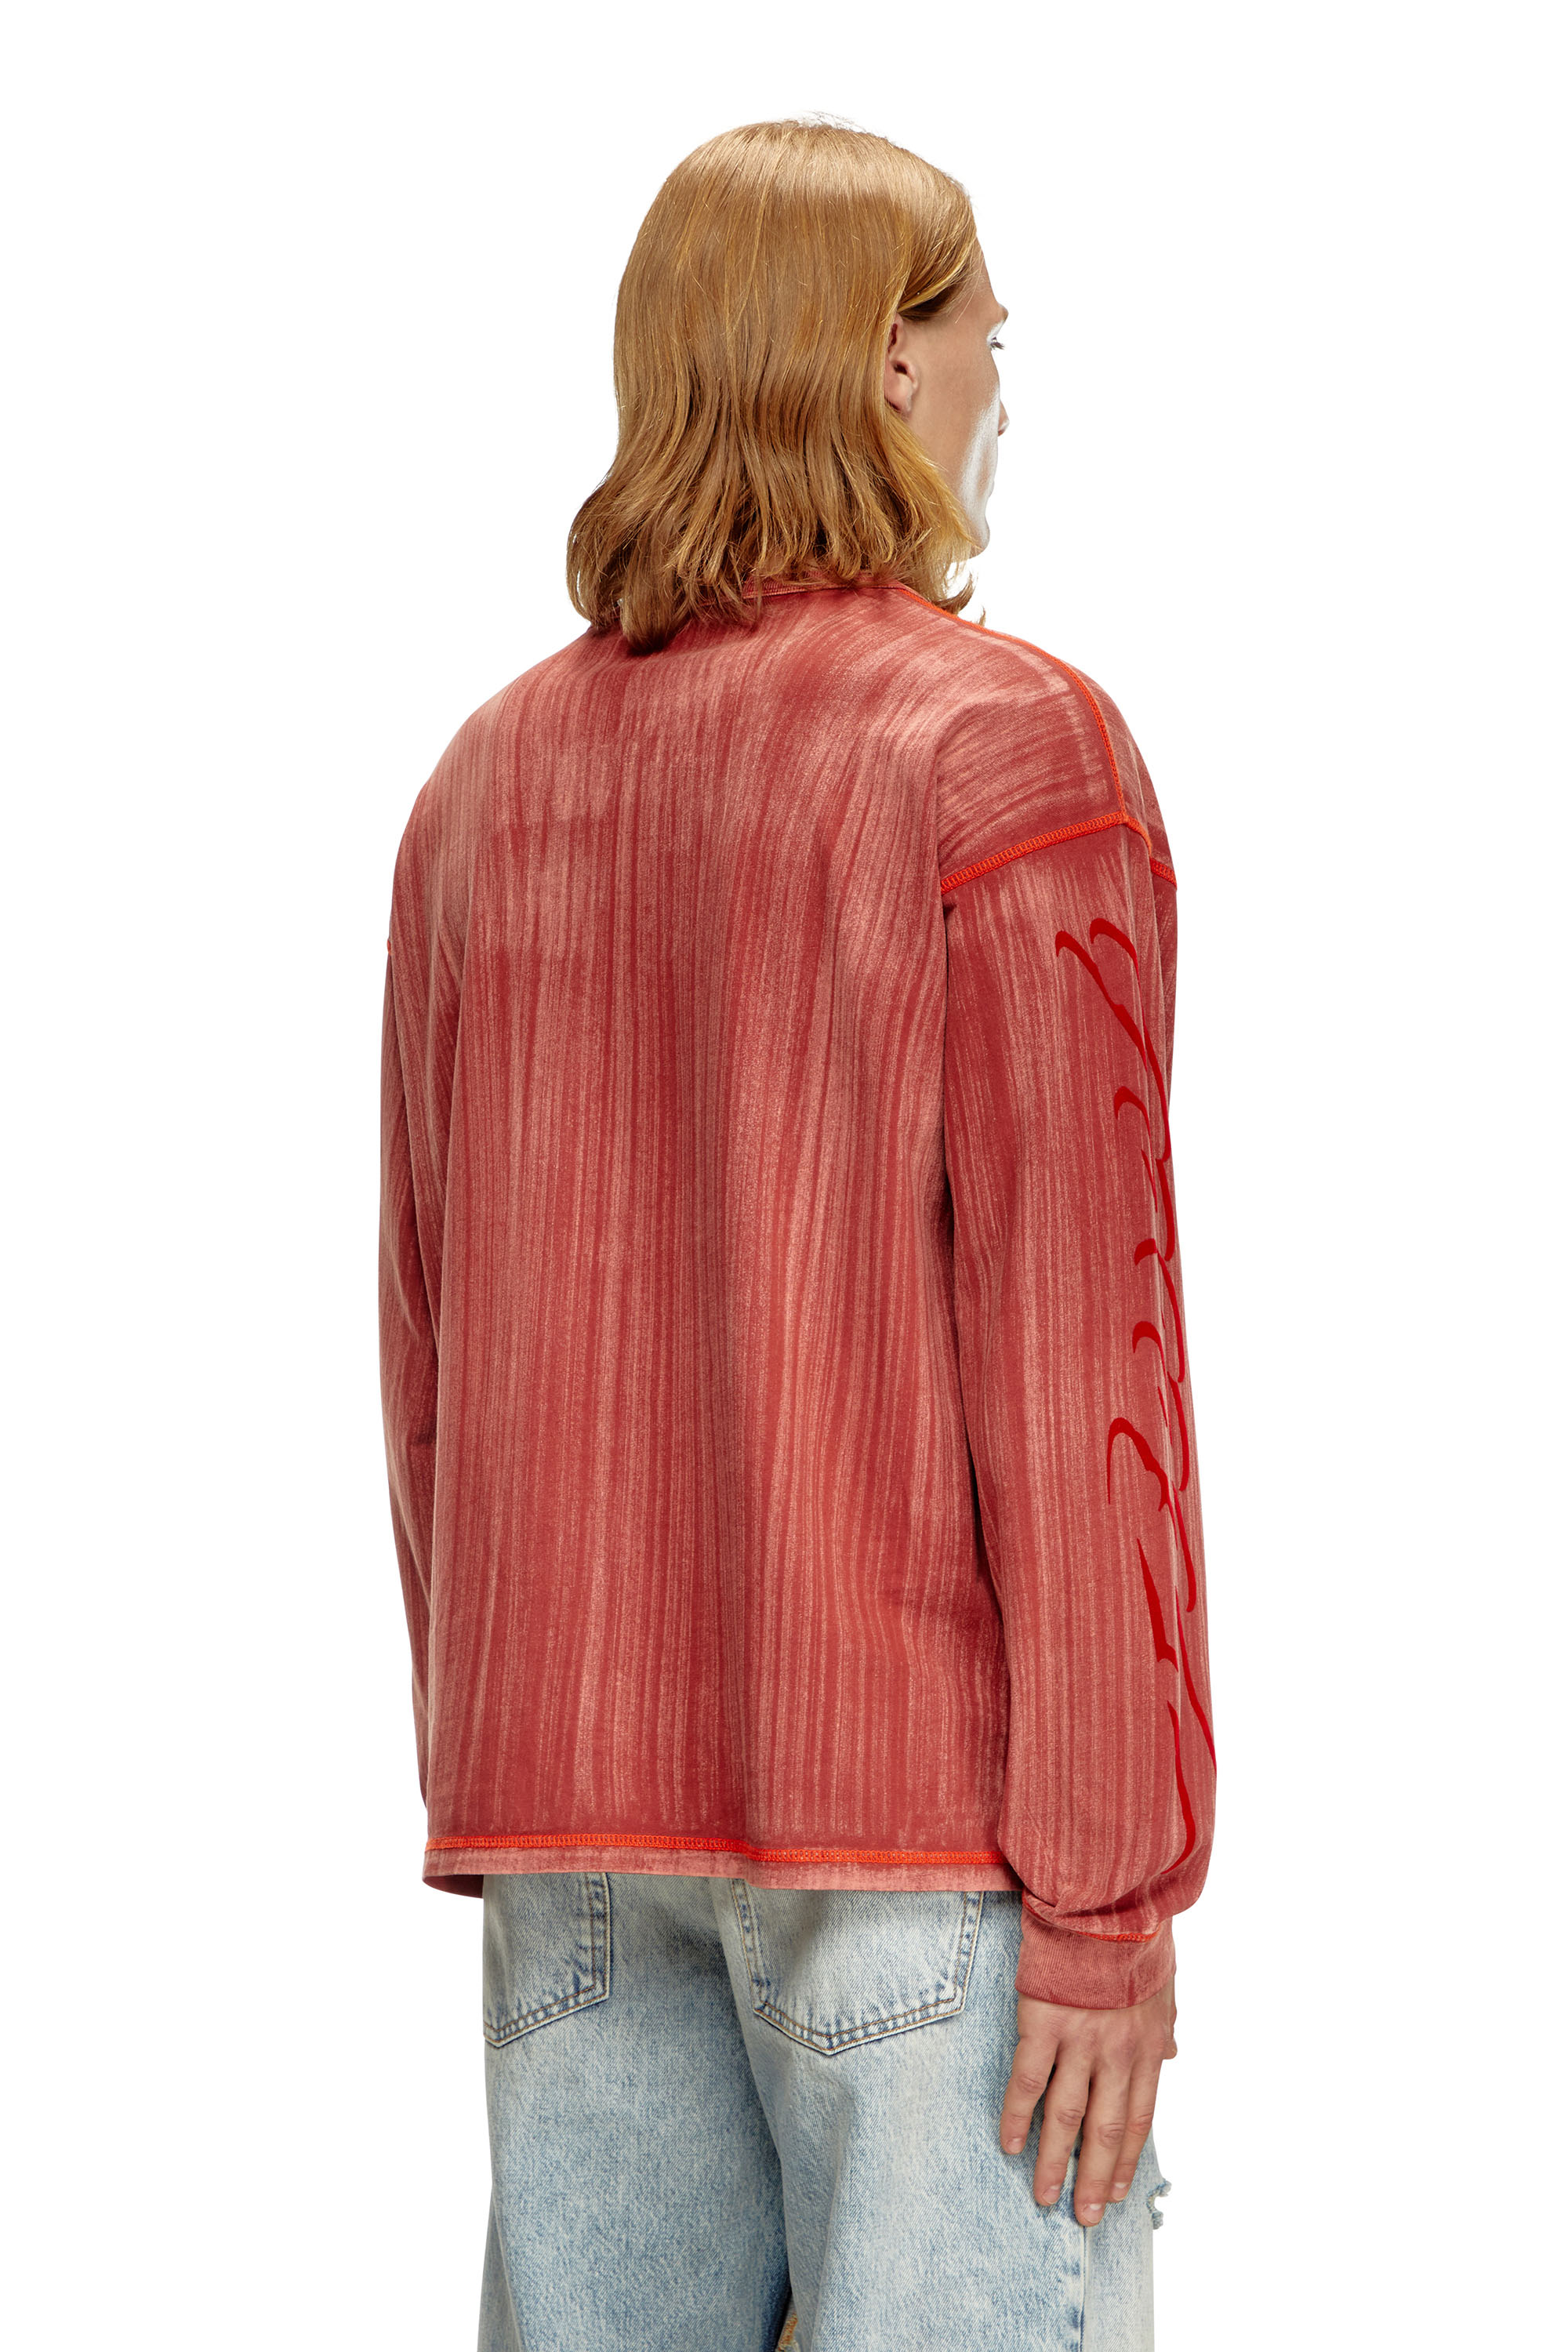 Diesel - T-BOXT-LS-Q2, Hombre Camiseta de manga larga con desteñido a pinceladas in Rojo - Image 4